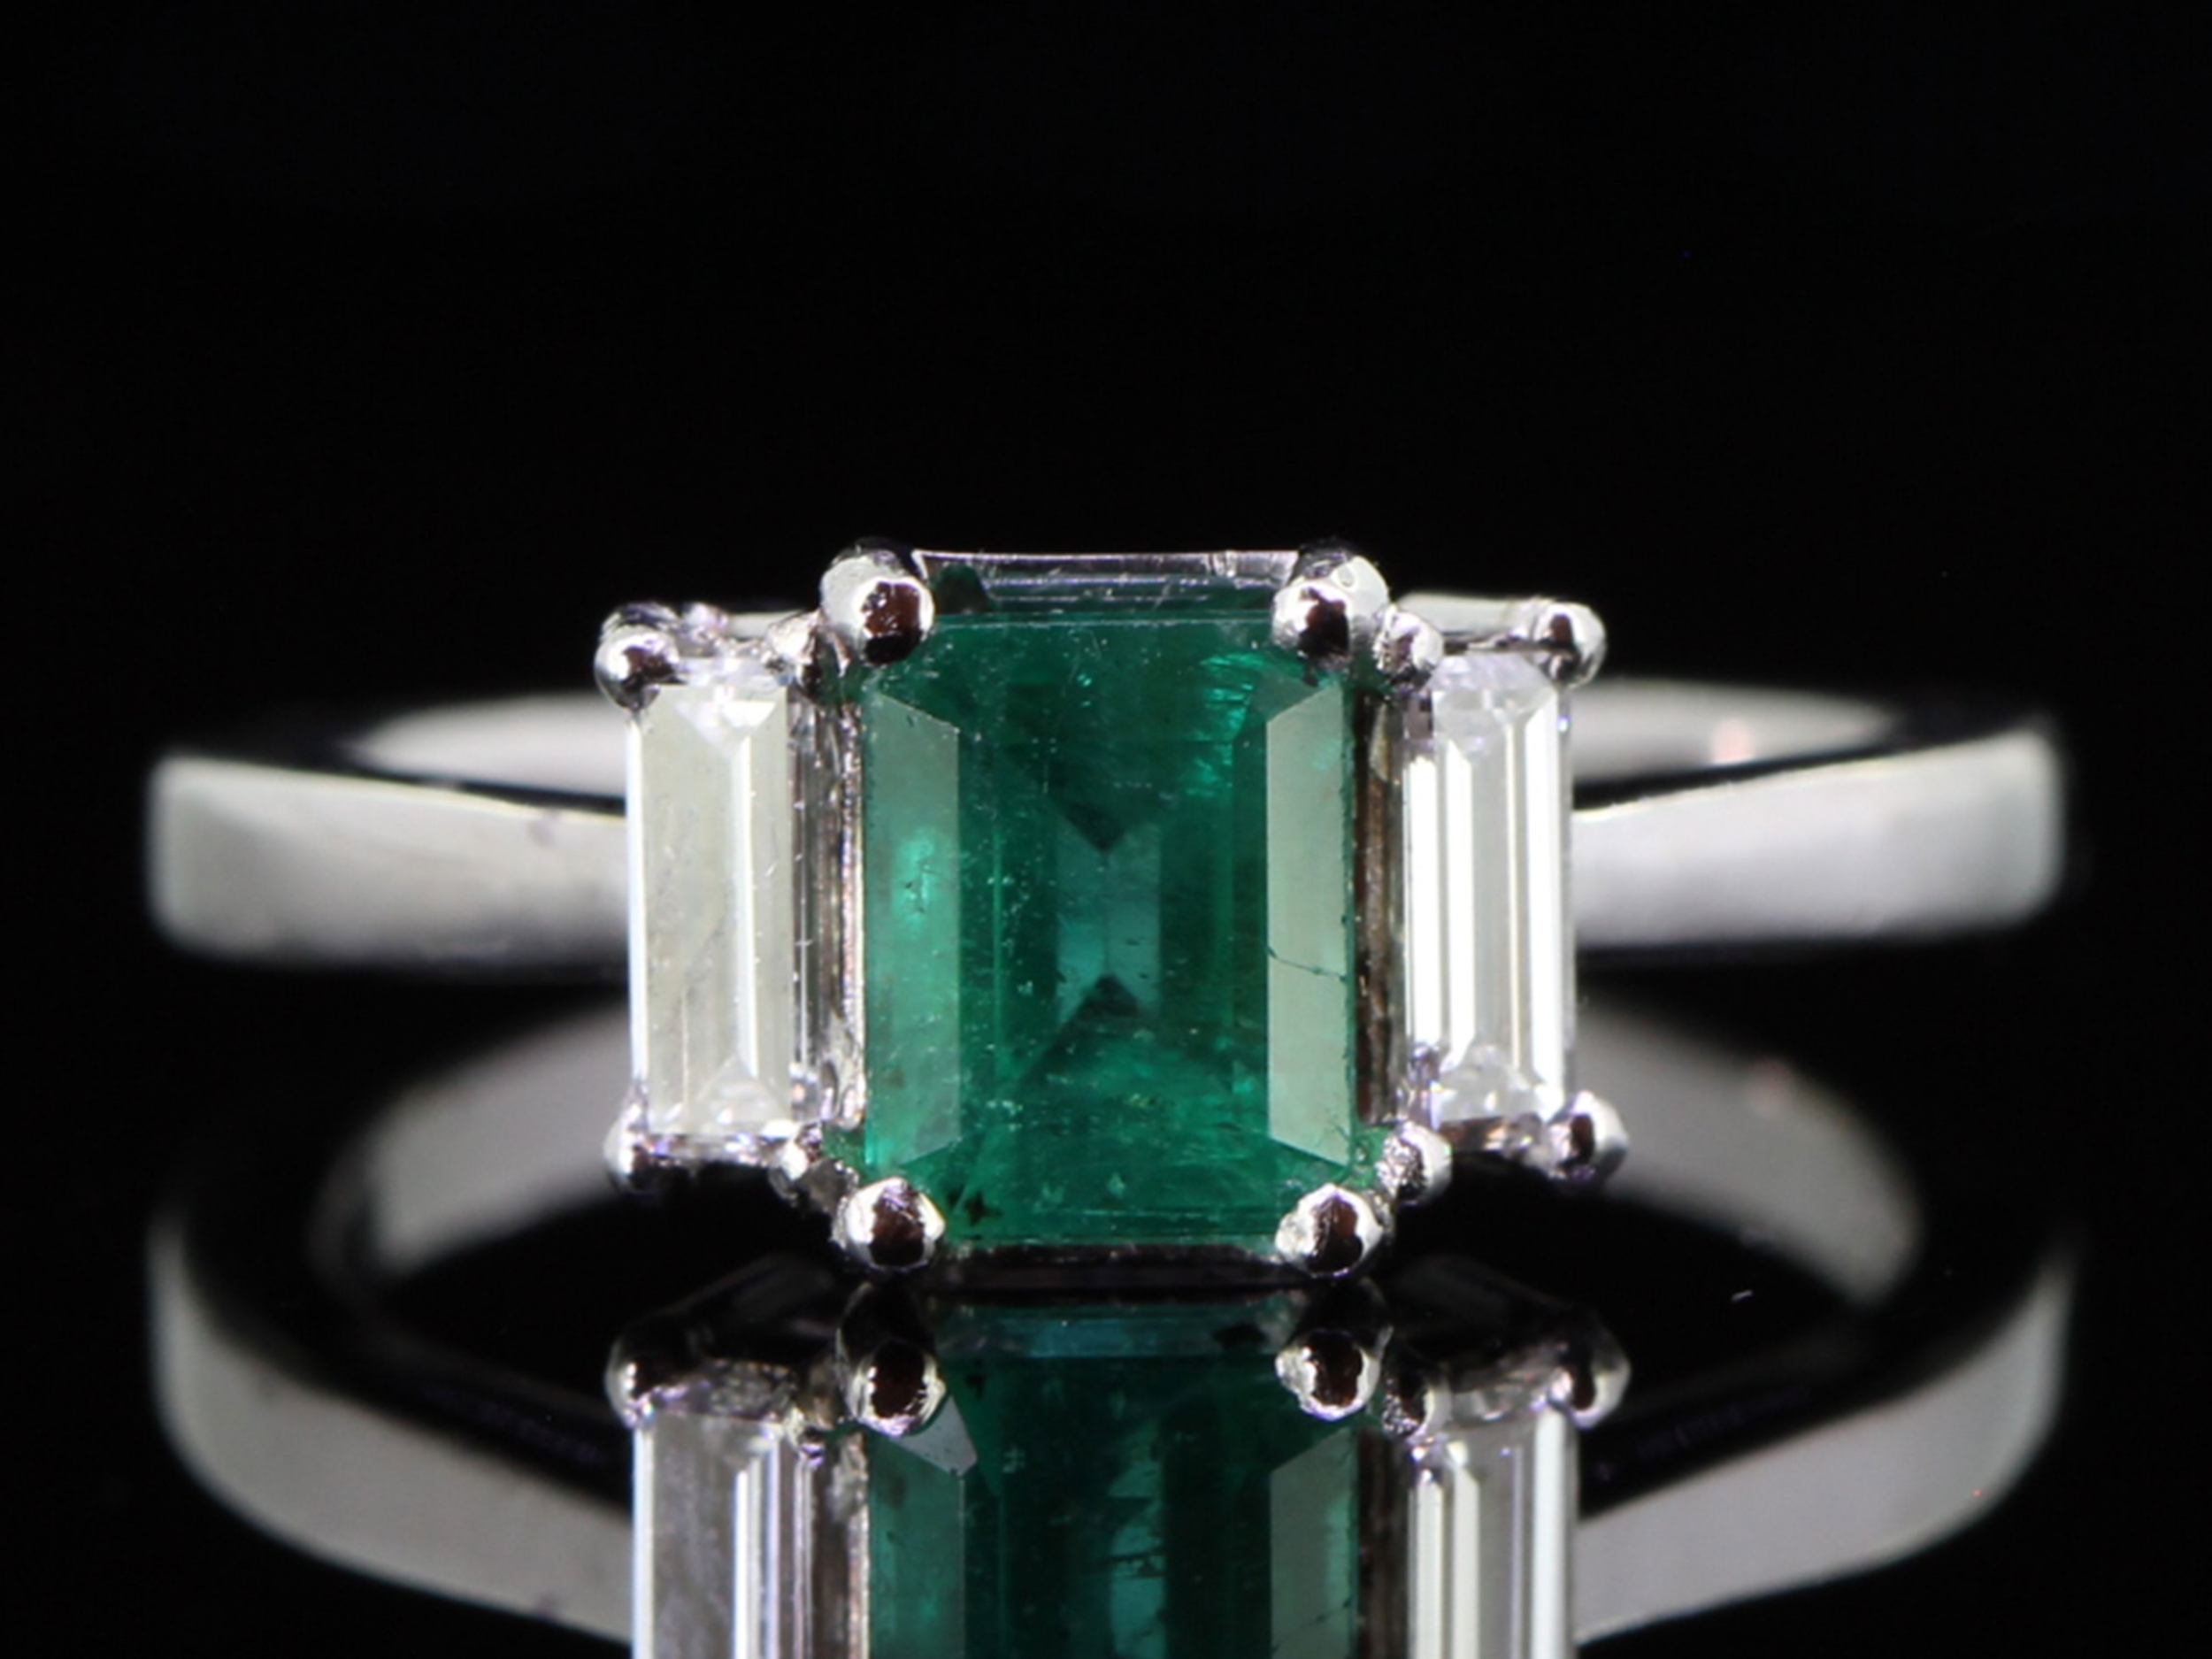 Breathtaking emerald and diamond art deco inspired platinum ring